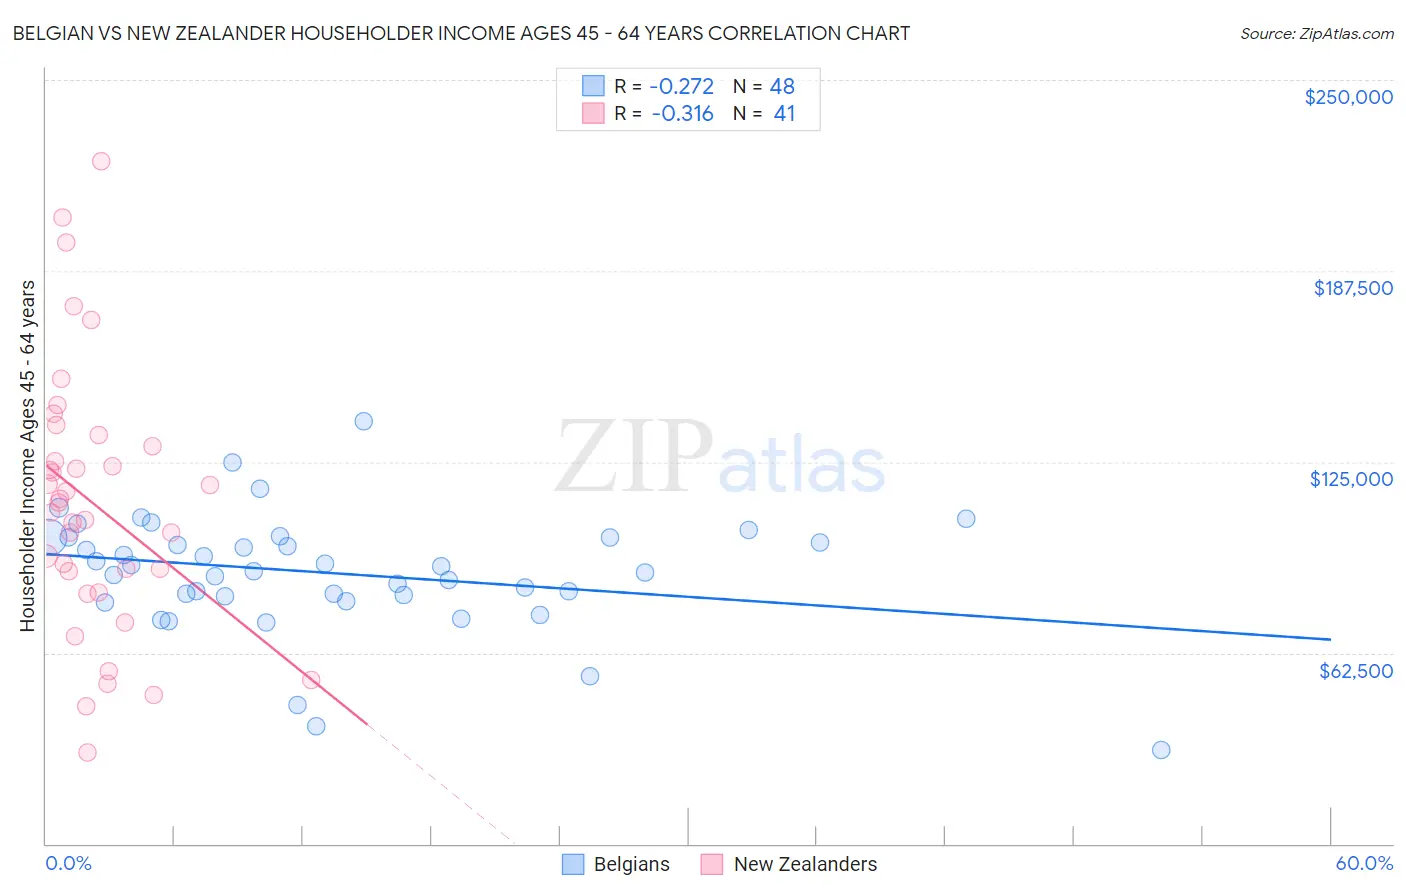 Belgian vs New Zealander Householder Income Ages 45 - 64 years